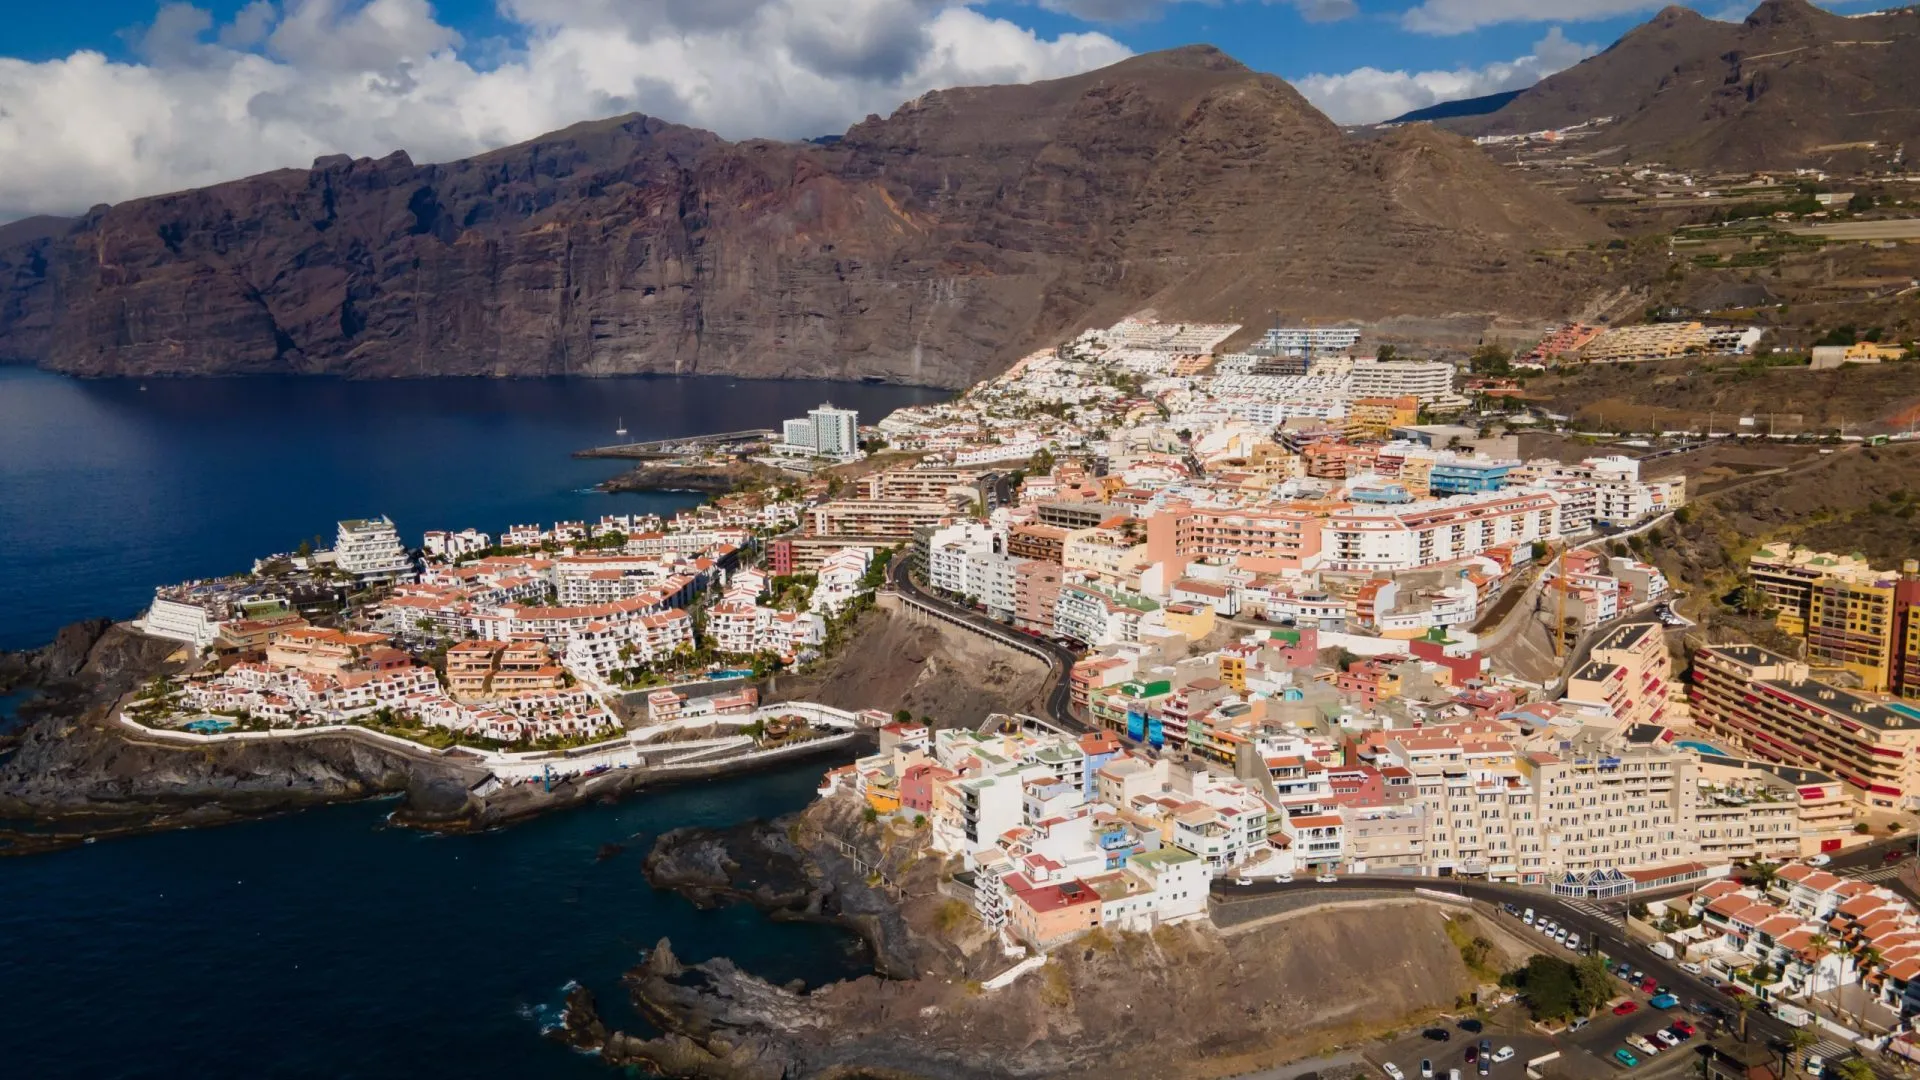 Puerto de Santiago sits between Los Gigantes and Playa de la Arena on the west coast of Tenerife